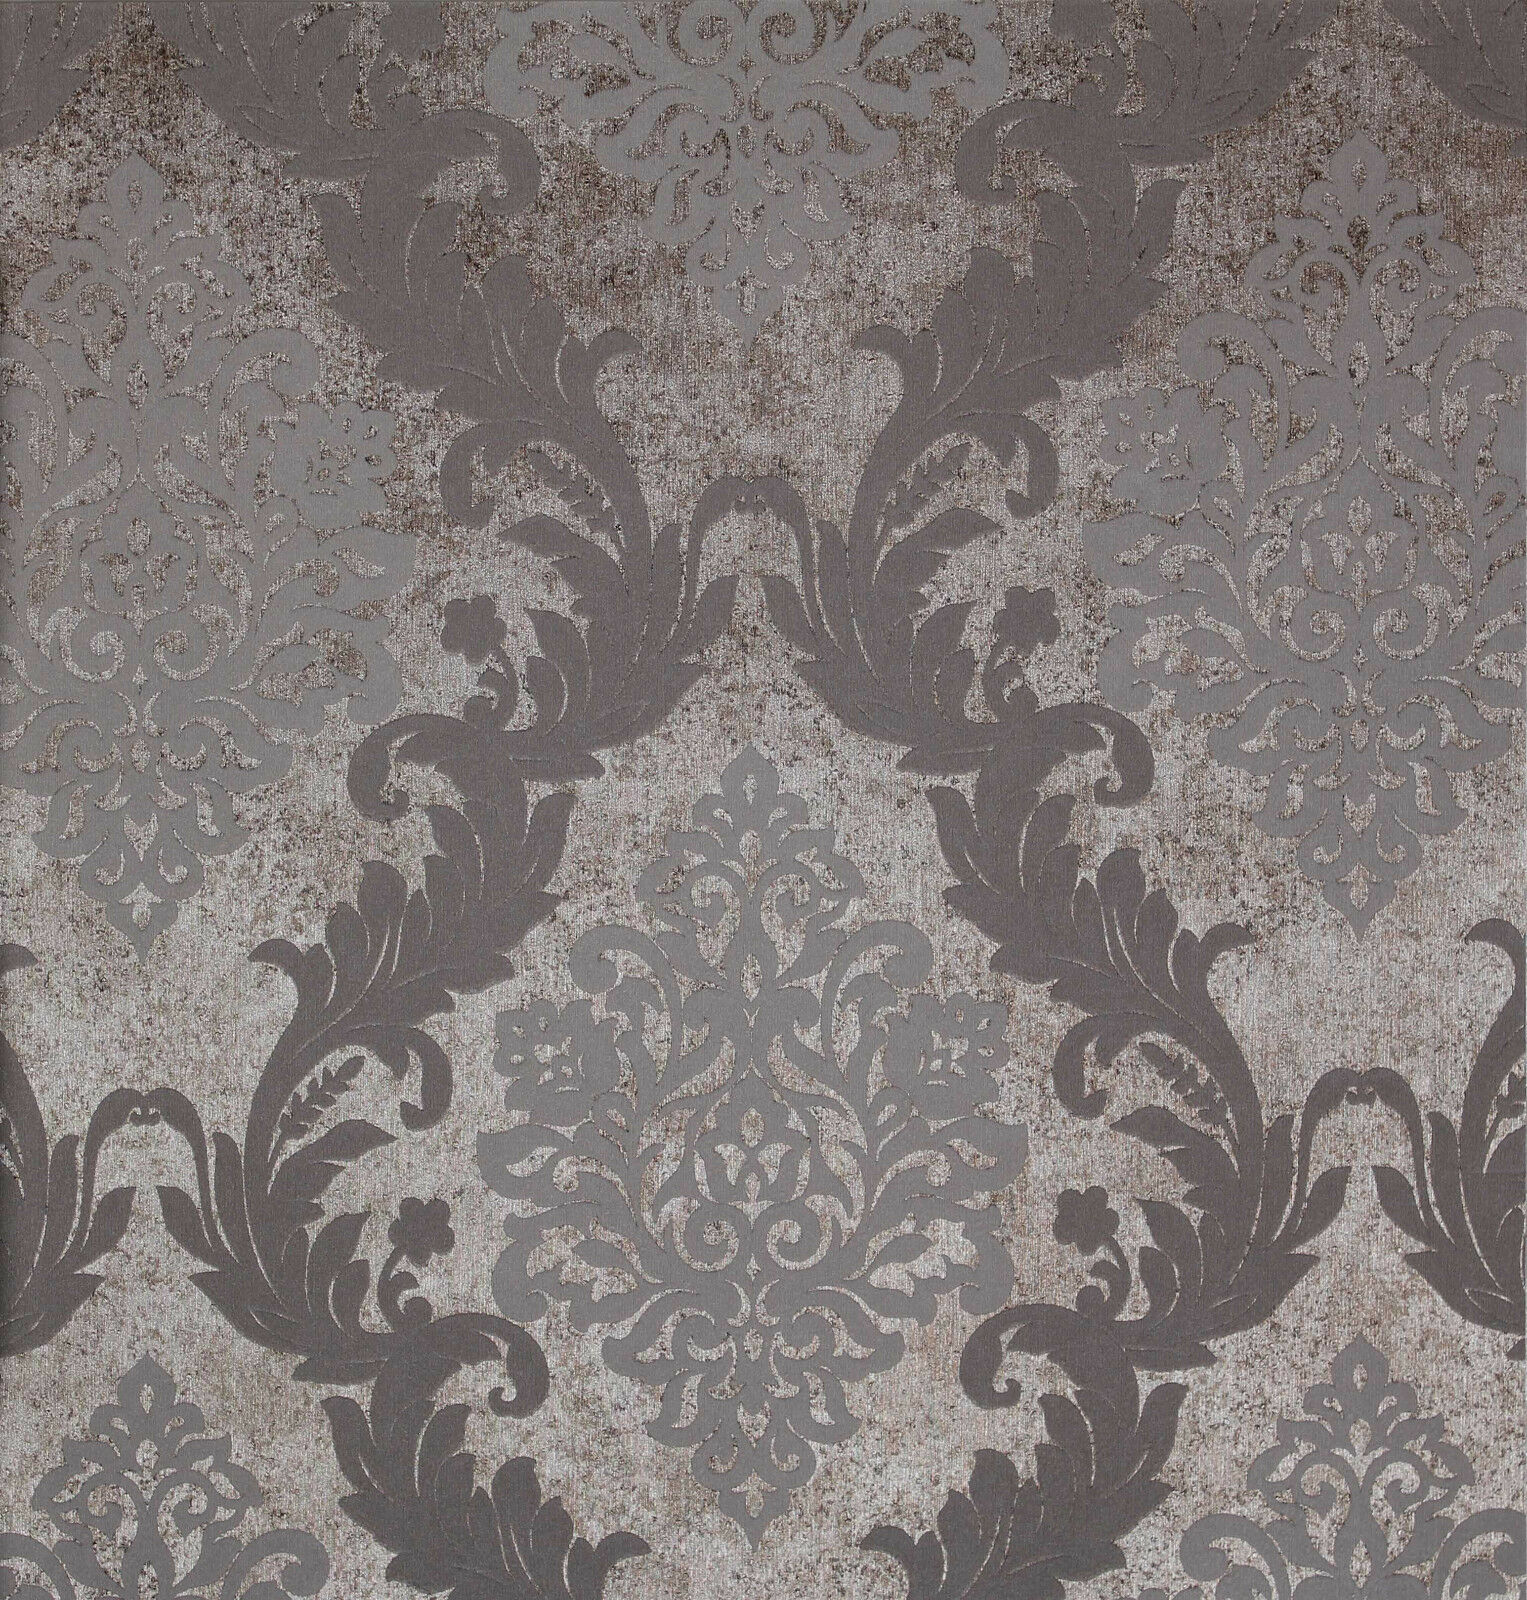 silver embossed wallpaper,pattern,brown,wallpaper,textile,design